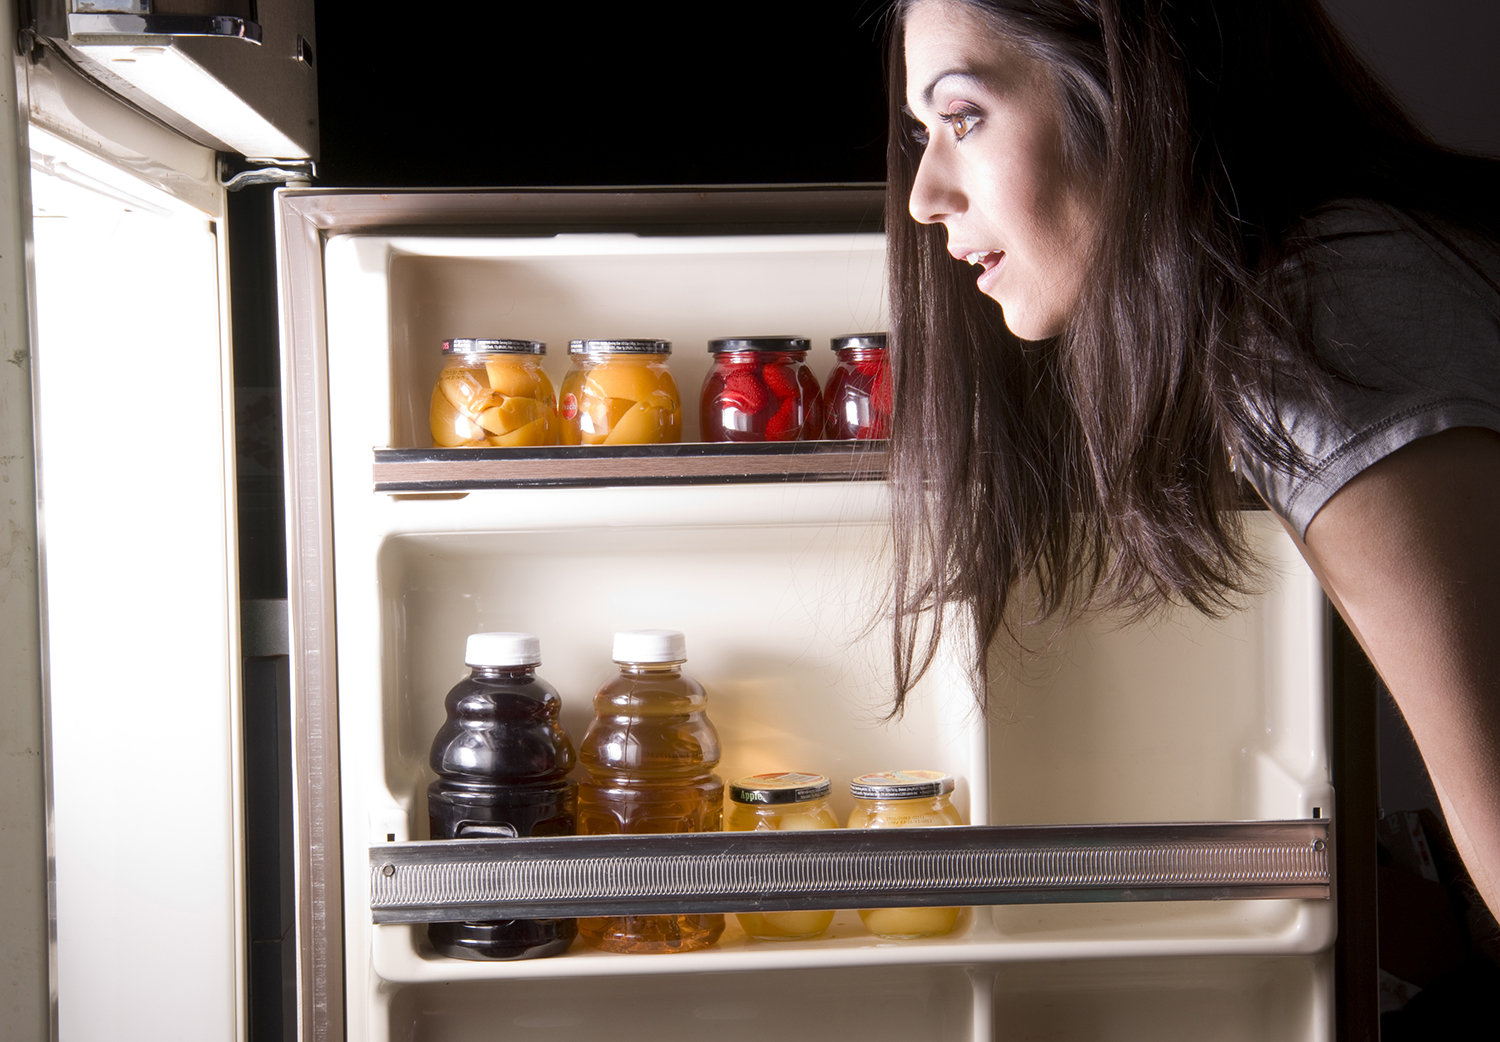 A woman raids the refrigerator late at night